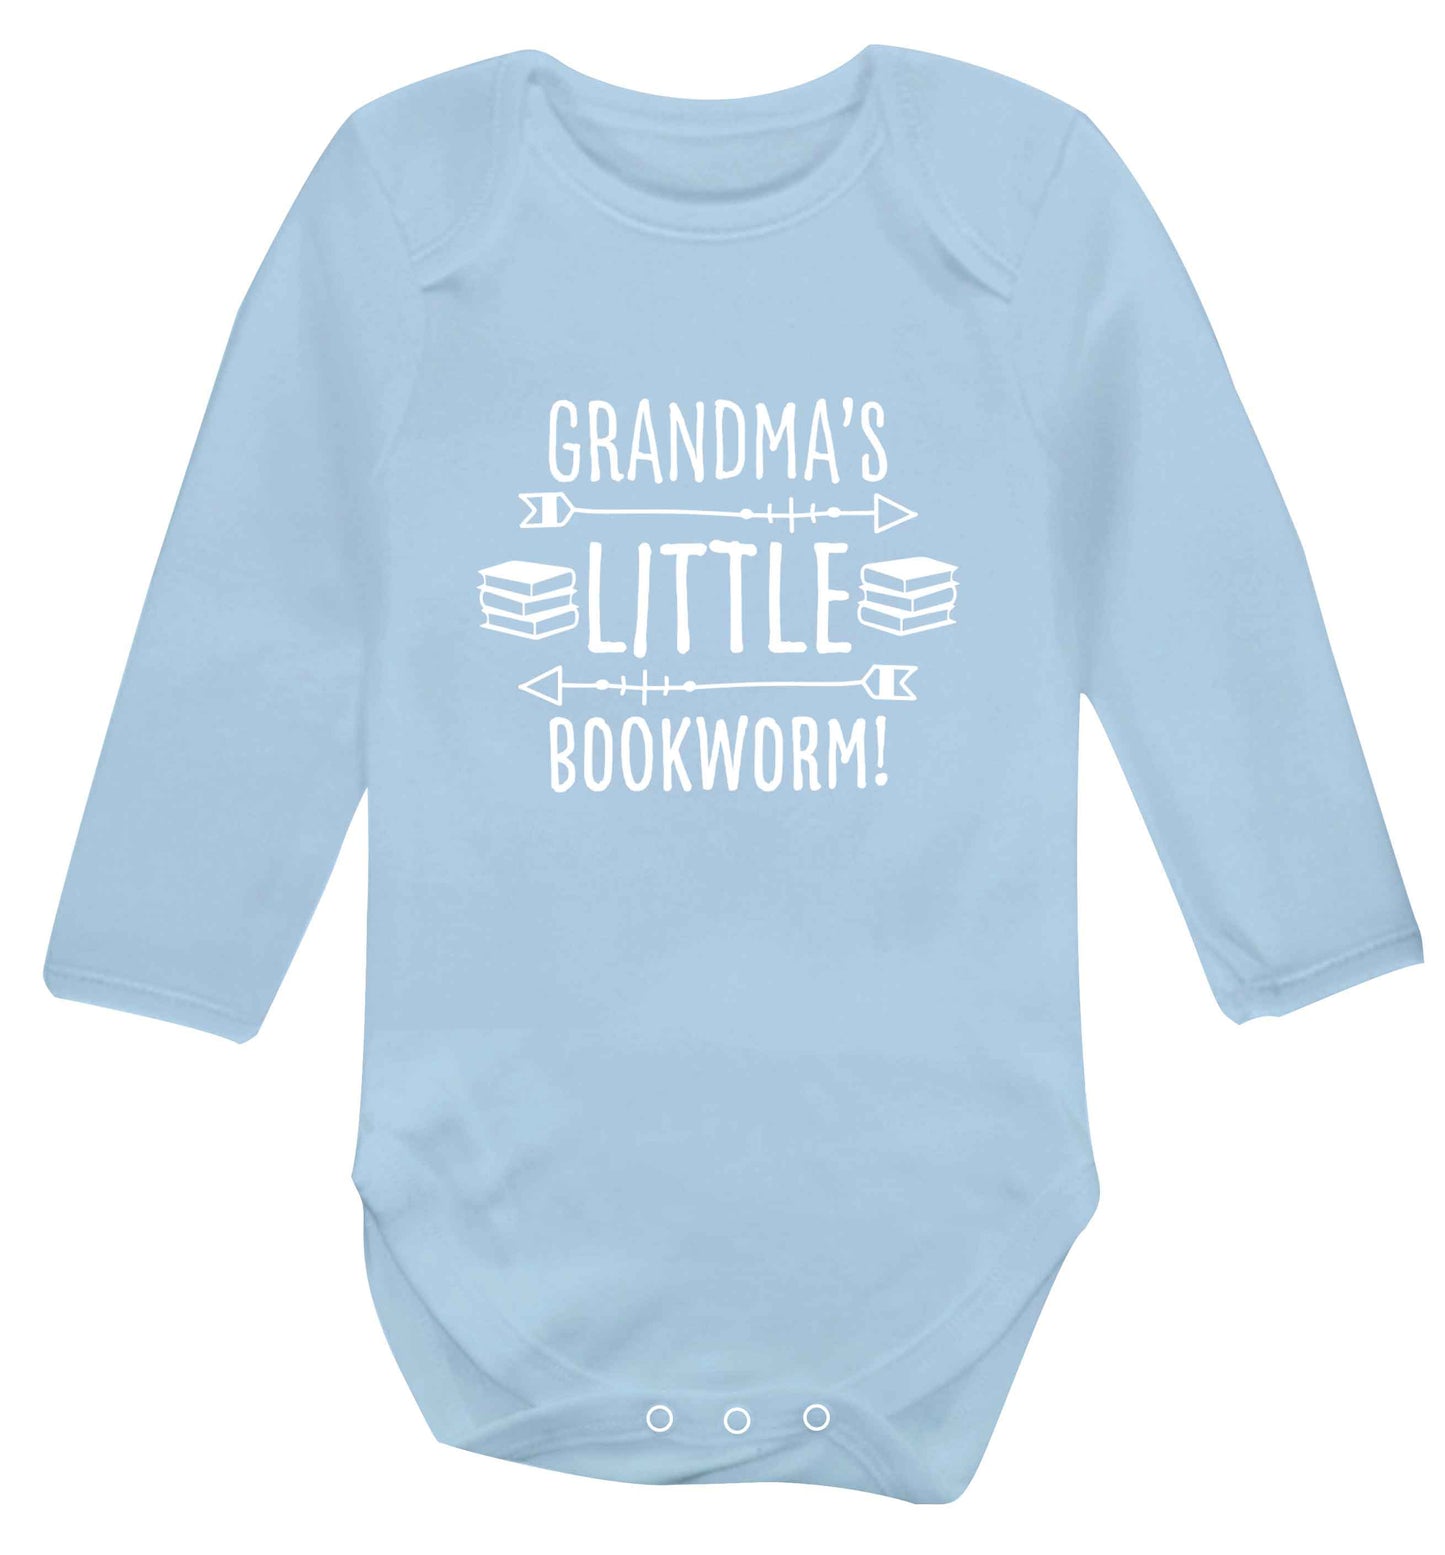 Grandma's little bookworm baby vest long sleeved pale blue 6-12 months